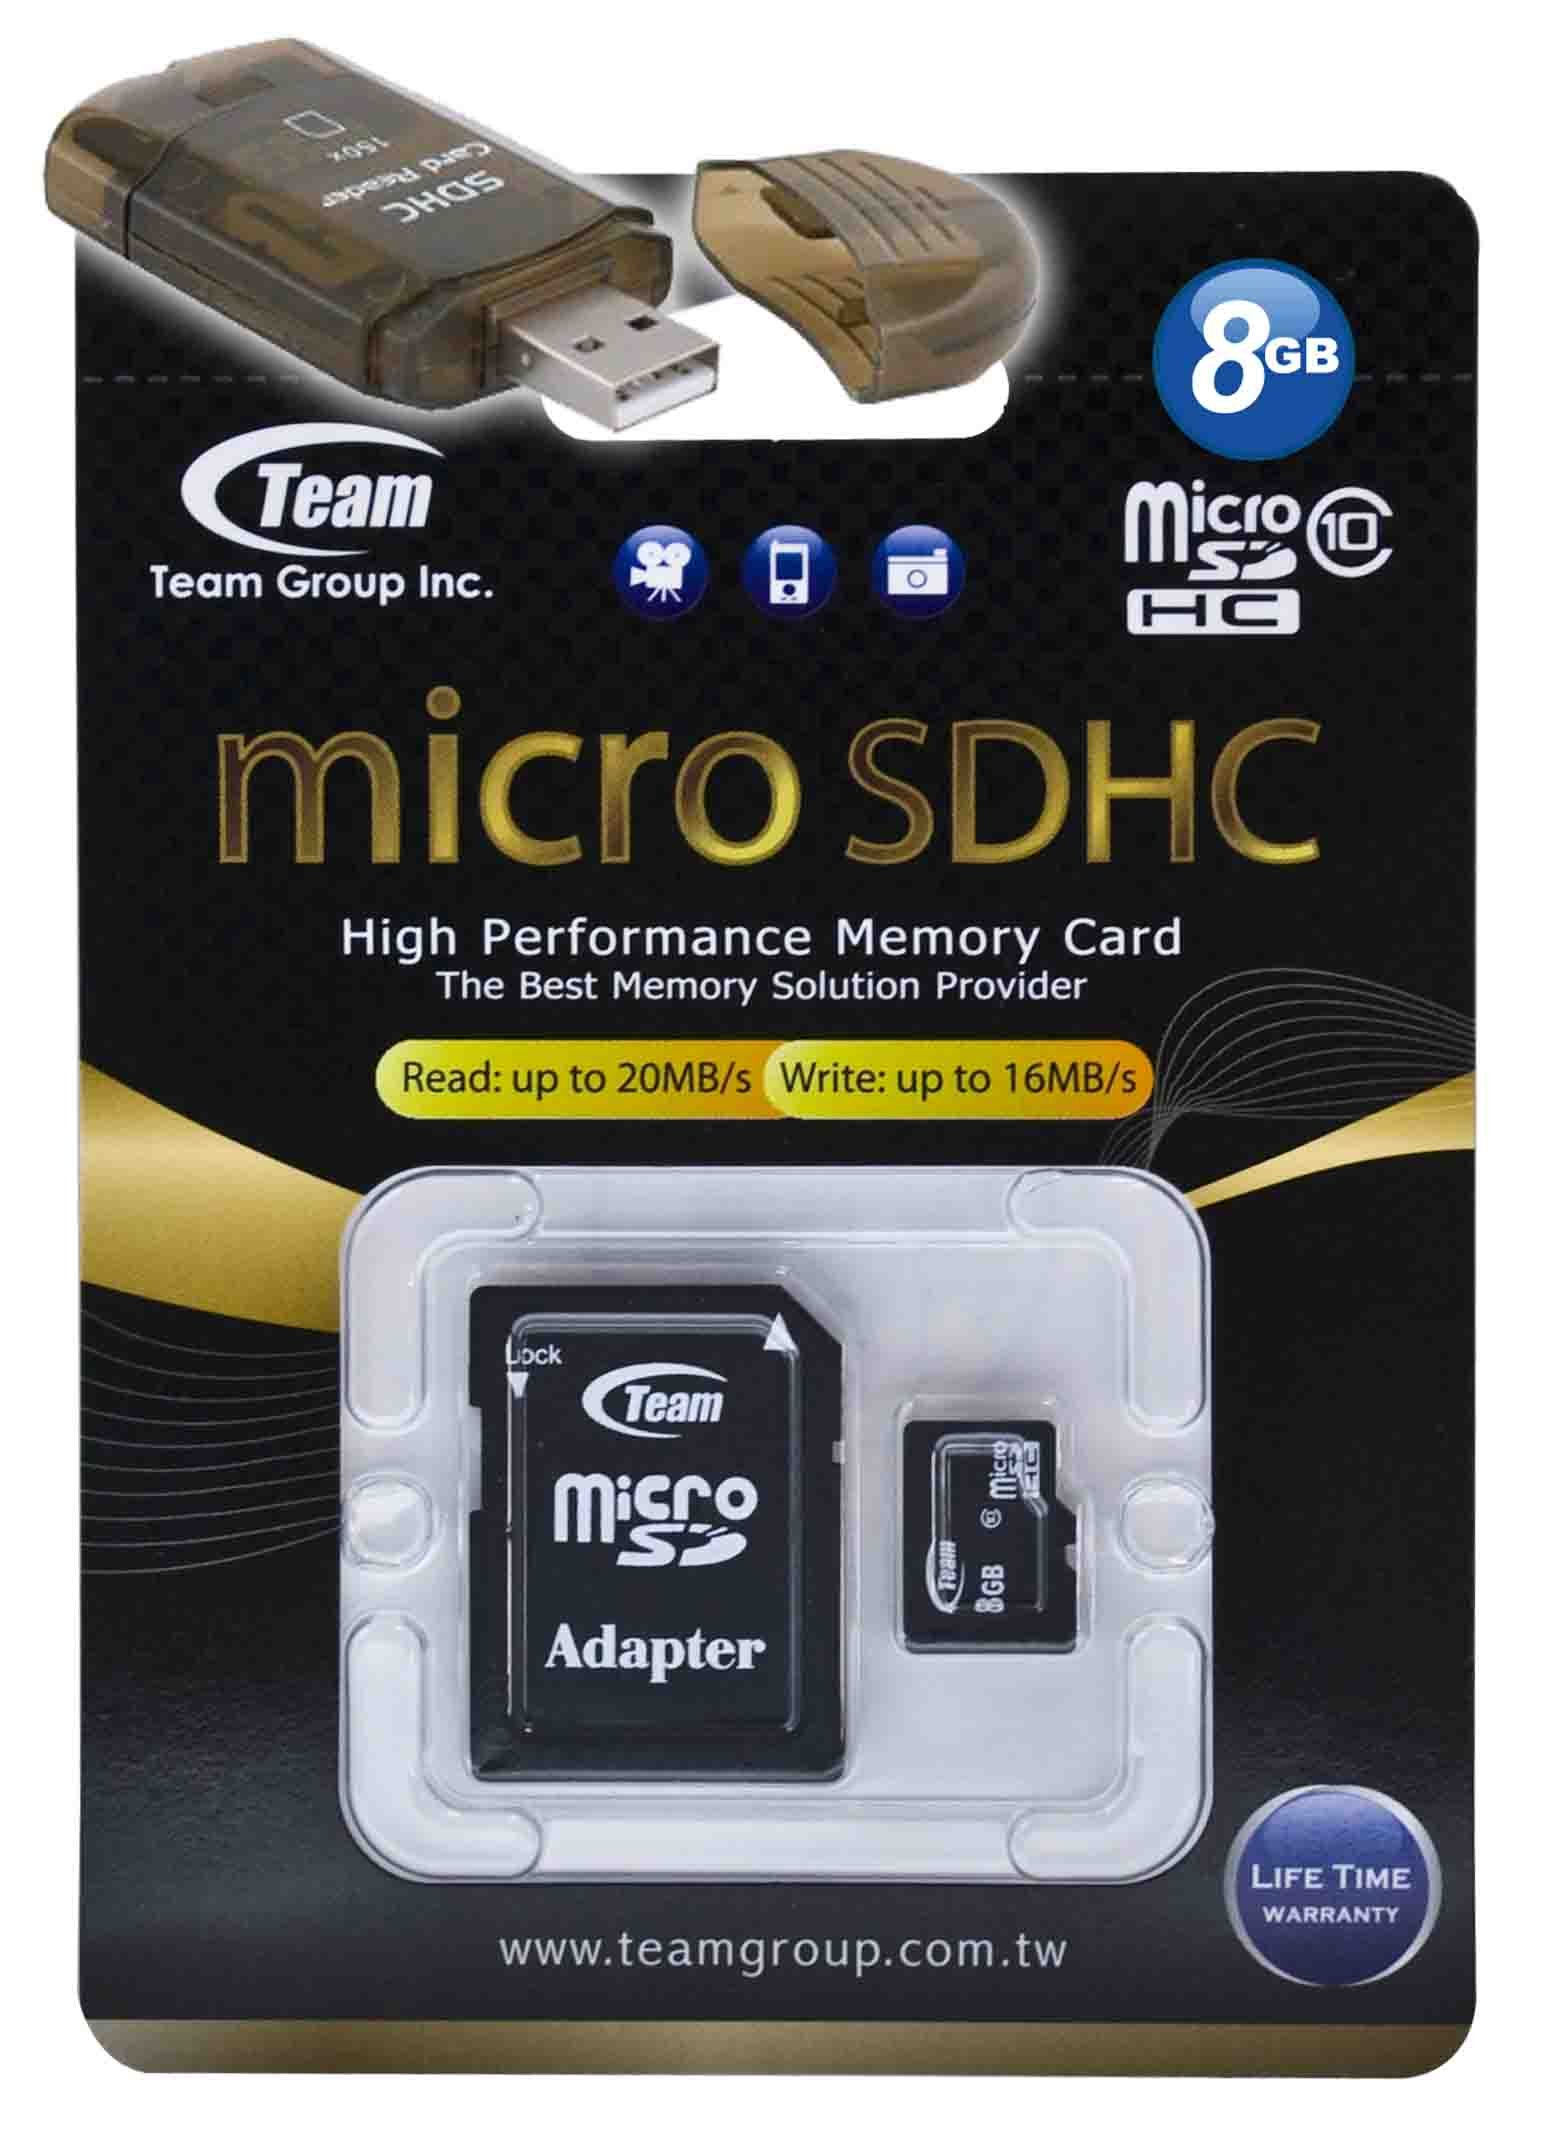 8GB Class 10 MicroSDHC Team High Speed 20MBSec Memory Card. Blazing Fast Card For LG PRIME GS390 SAMBA LG8575 phone. A free